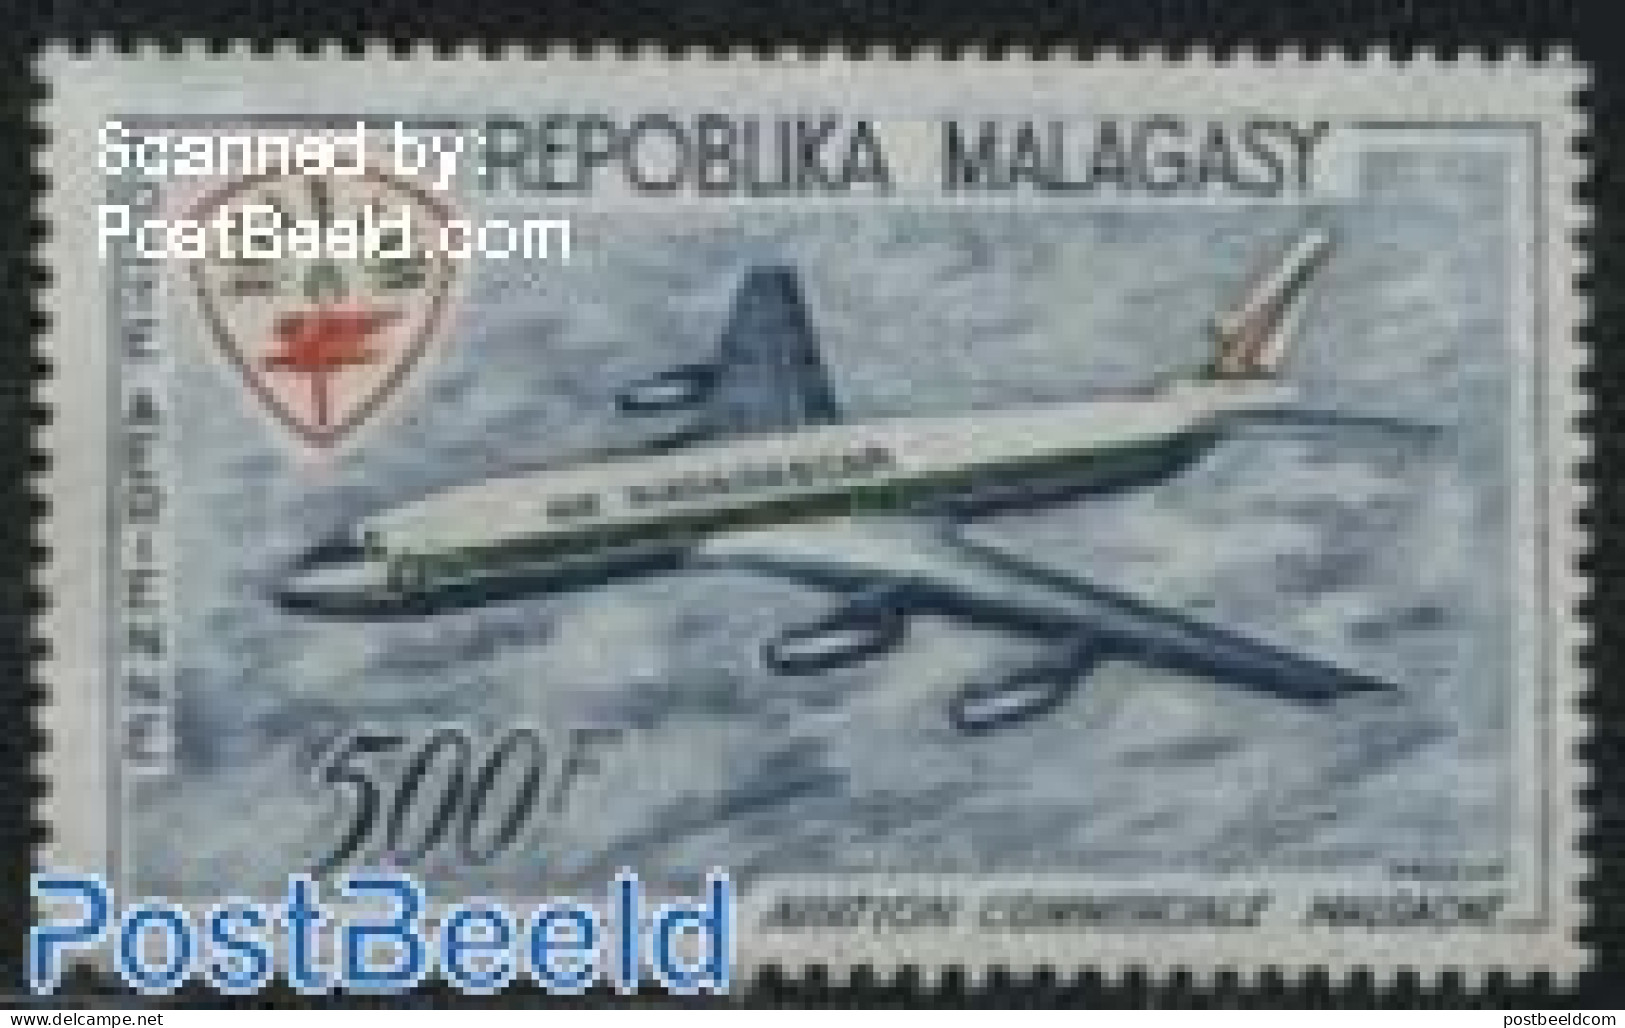 Madagascar 1963 Airmail Definitive 1v, Mint NH, Transport - Aircraft & Aviation - Avions